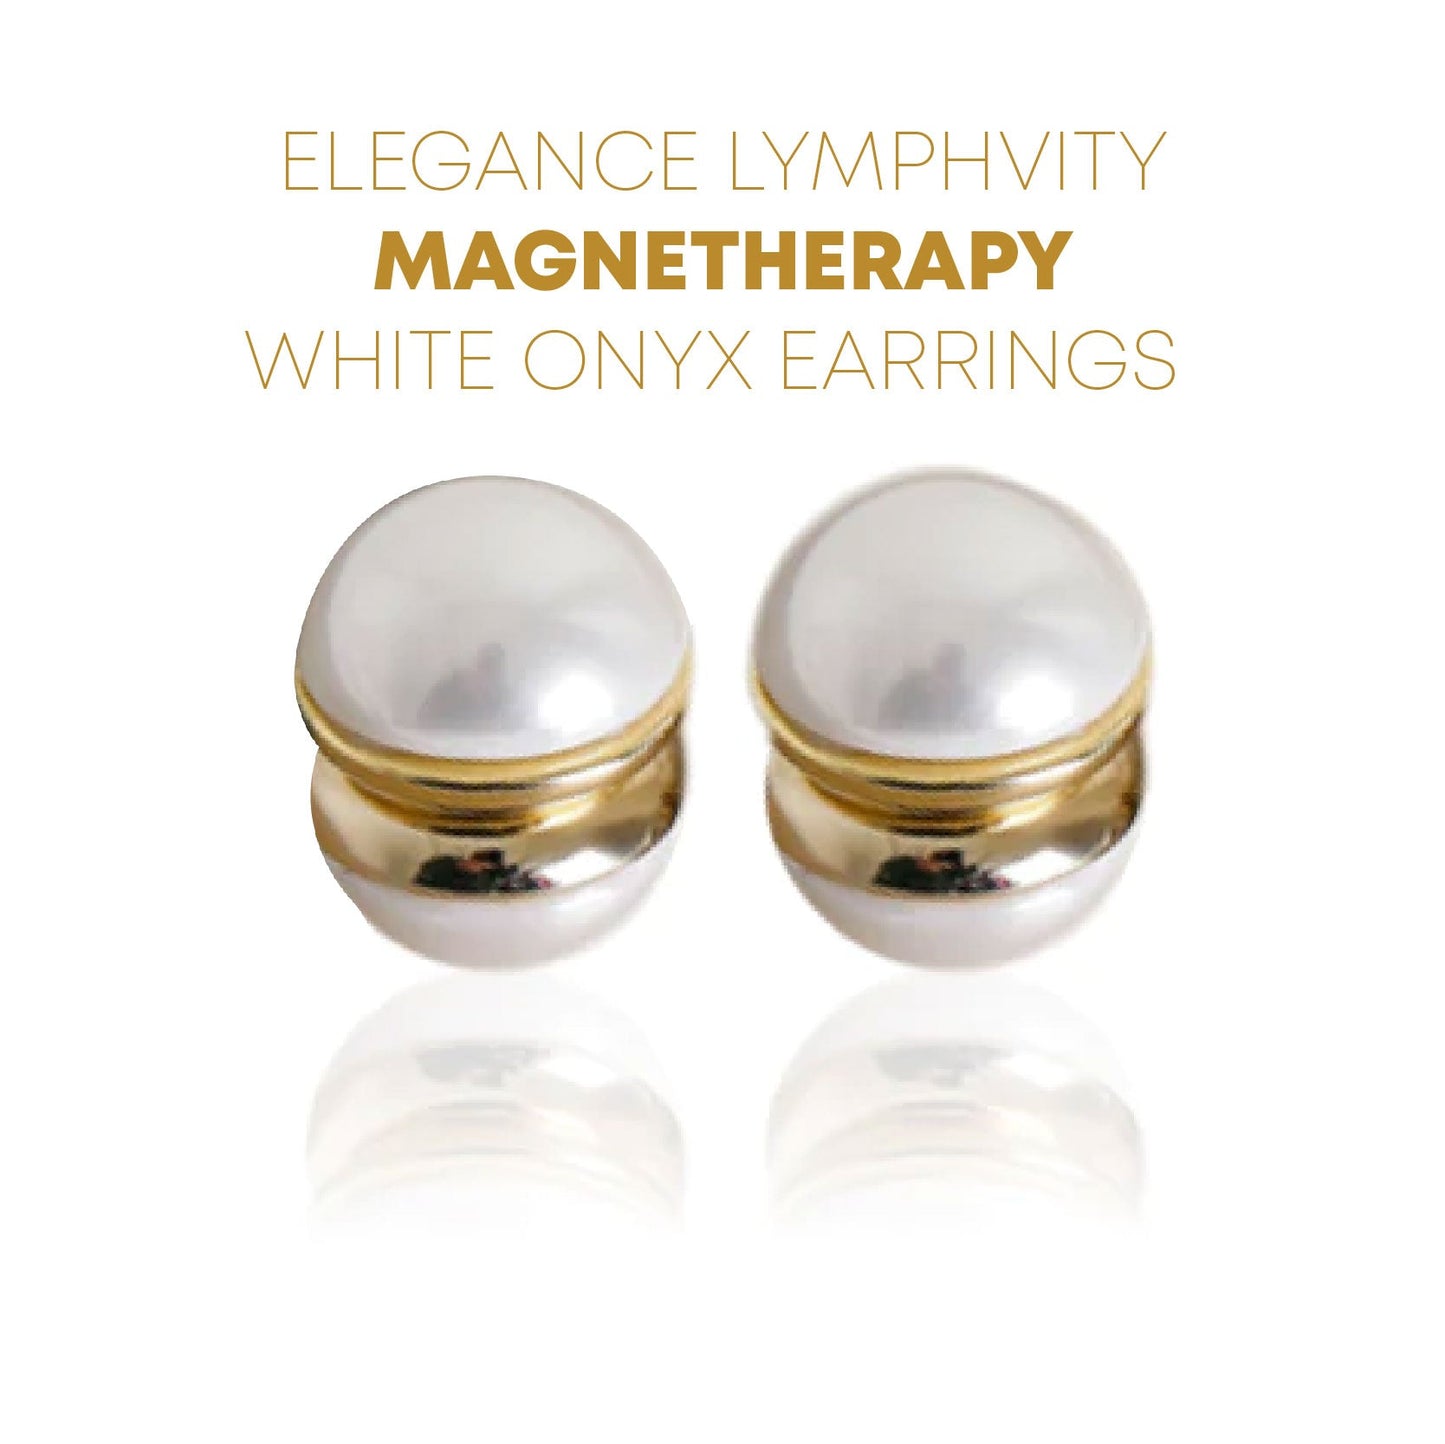 Elegance Lymphvity MagneTherapy White Onyx Earrings